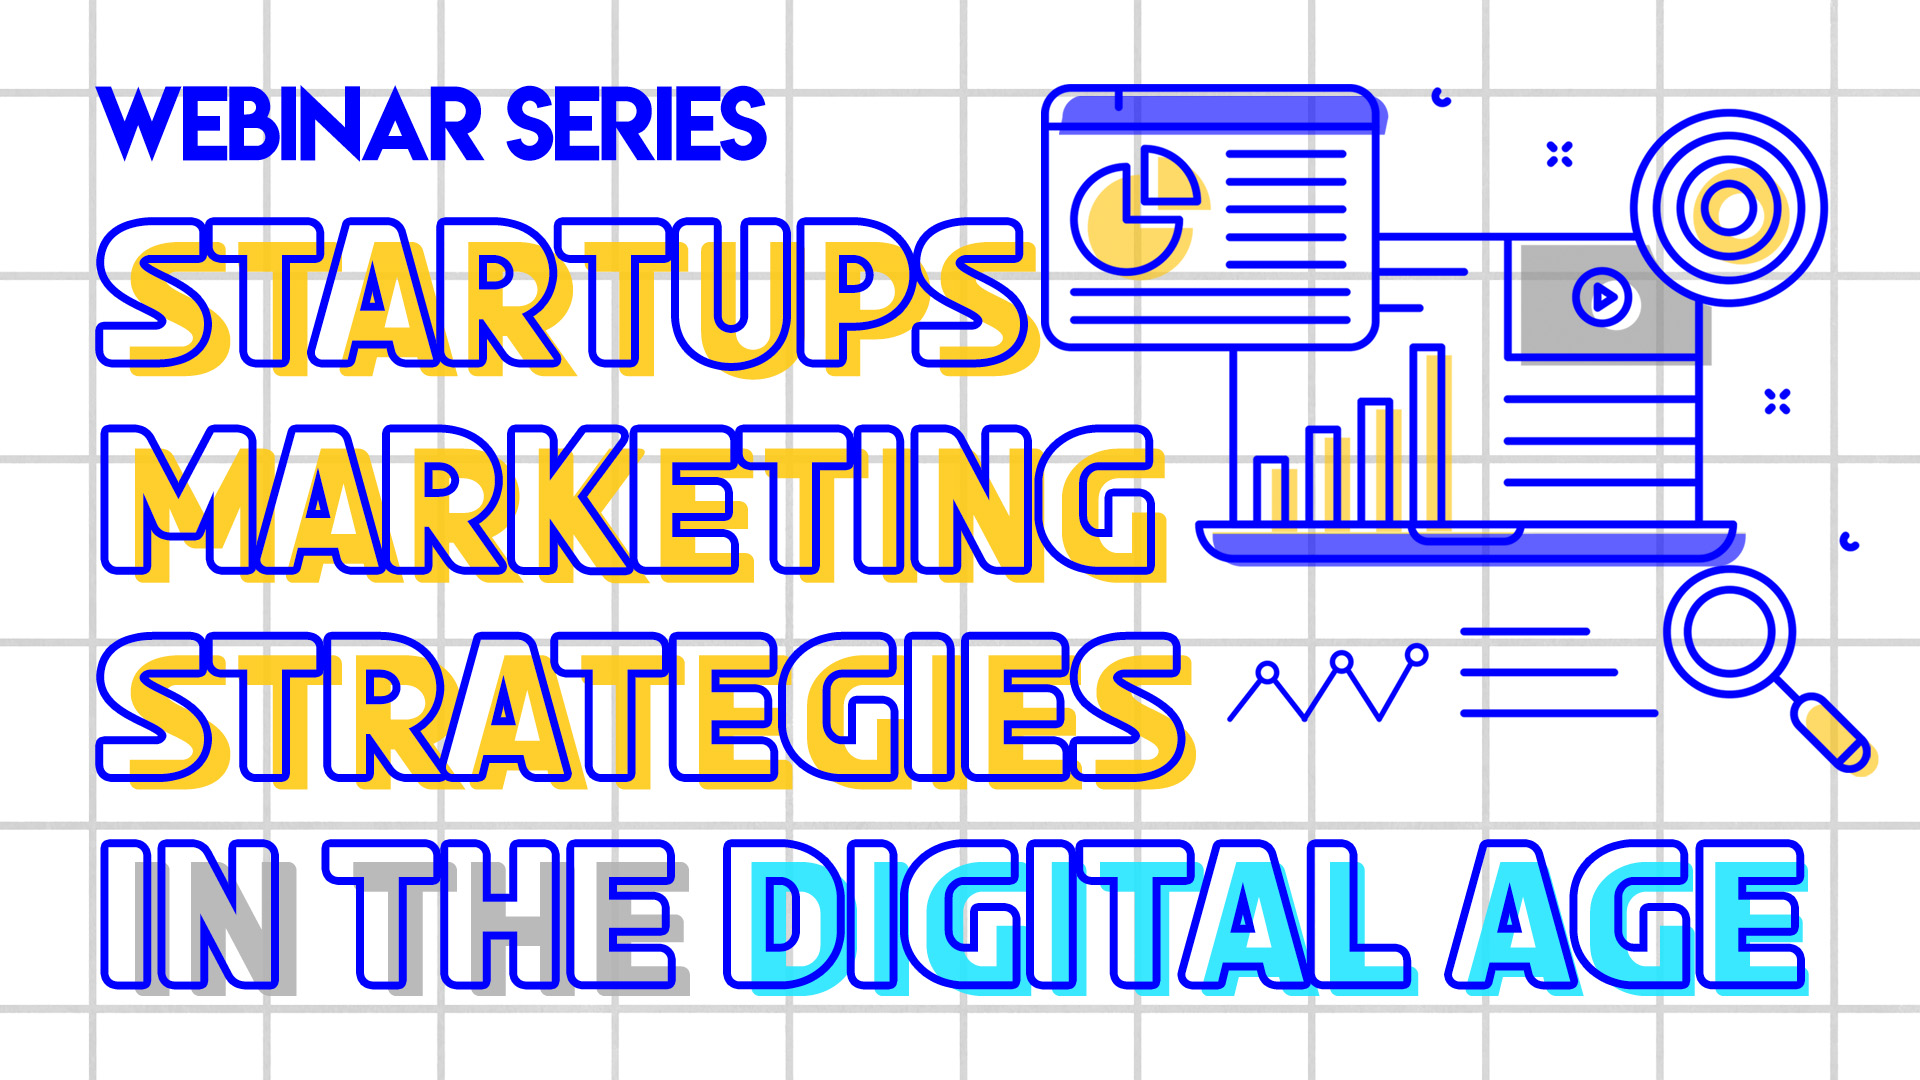 Startups Marketing Strategies in the Digital age (Webinar Series)